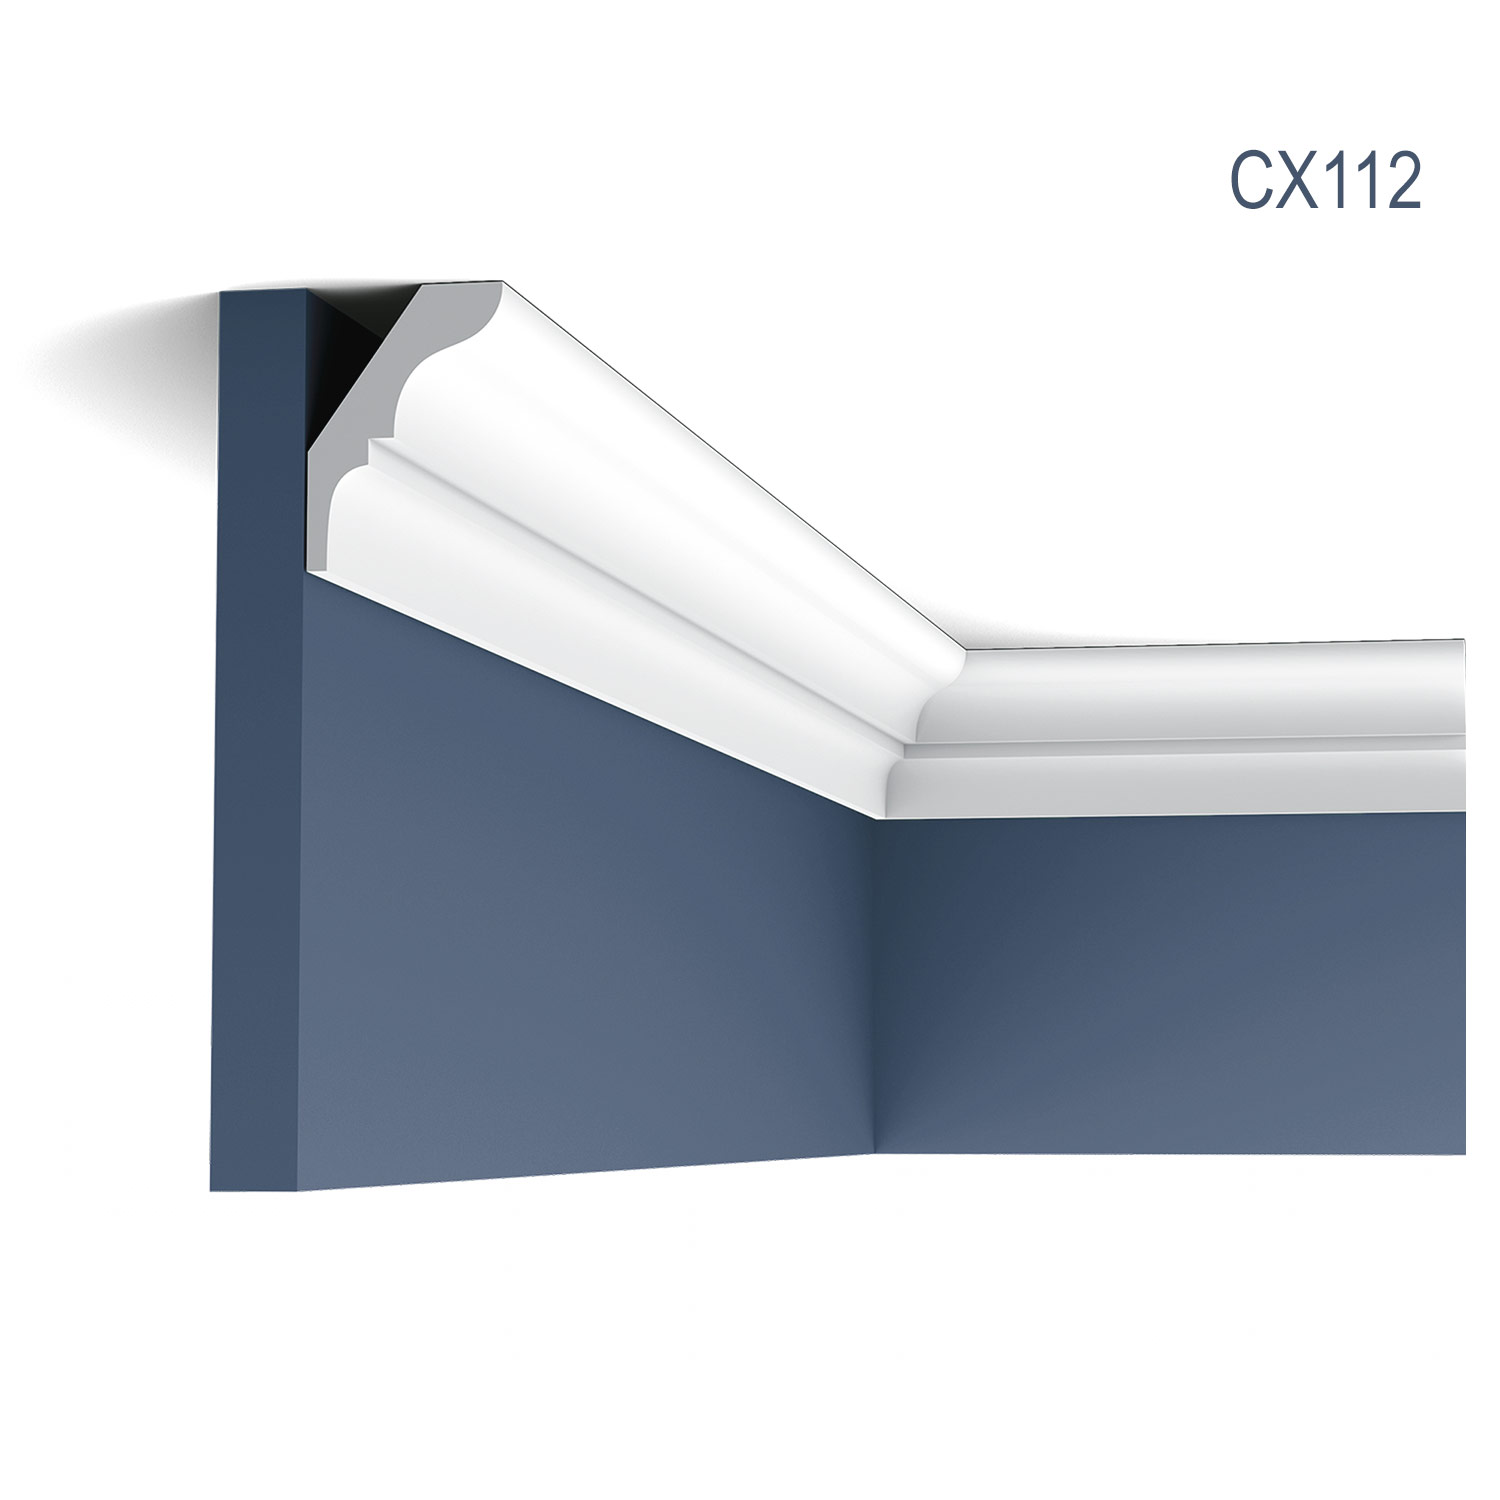 Cornisa Axxent CX112, Dimensiuni: 200 X 5.4 X 3.8 cm, Orac Decor